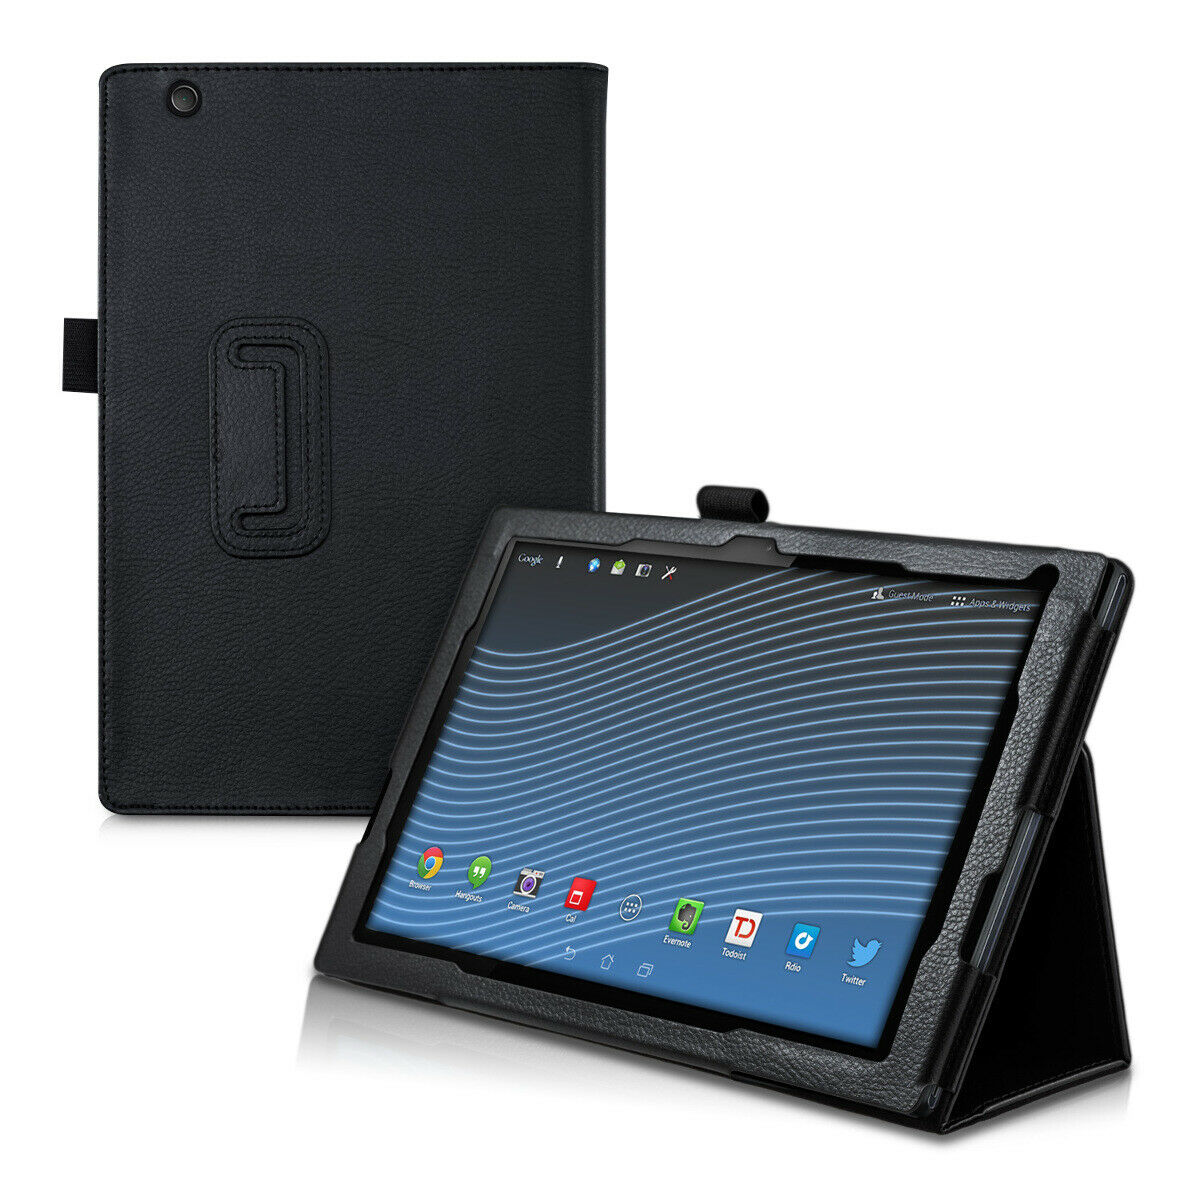 Pouzdro pro Sony Xperia Z4 Tablet černé